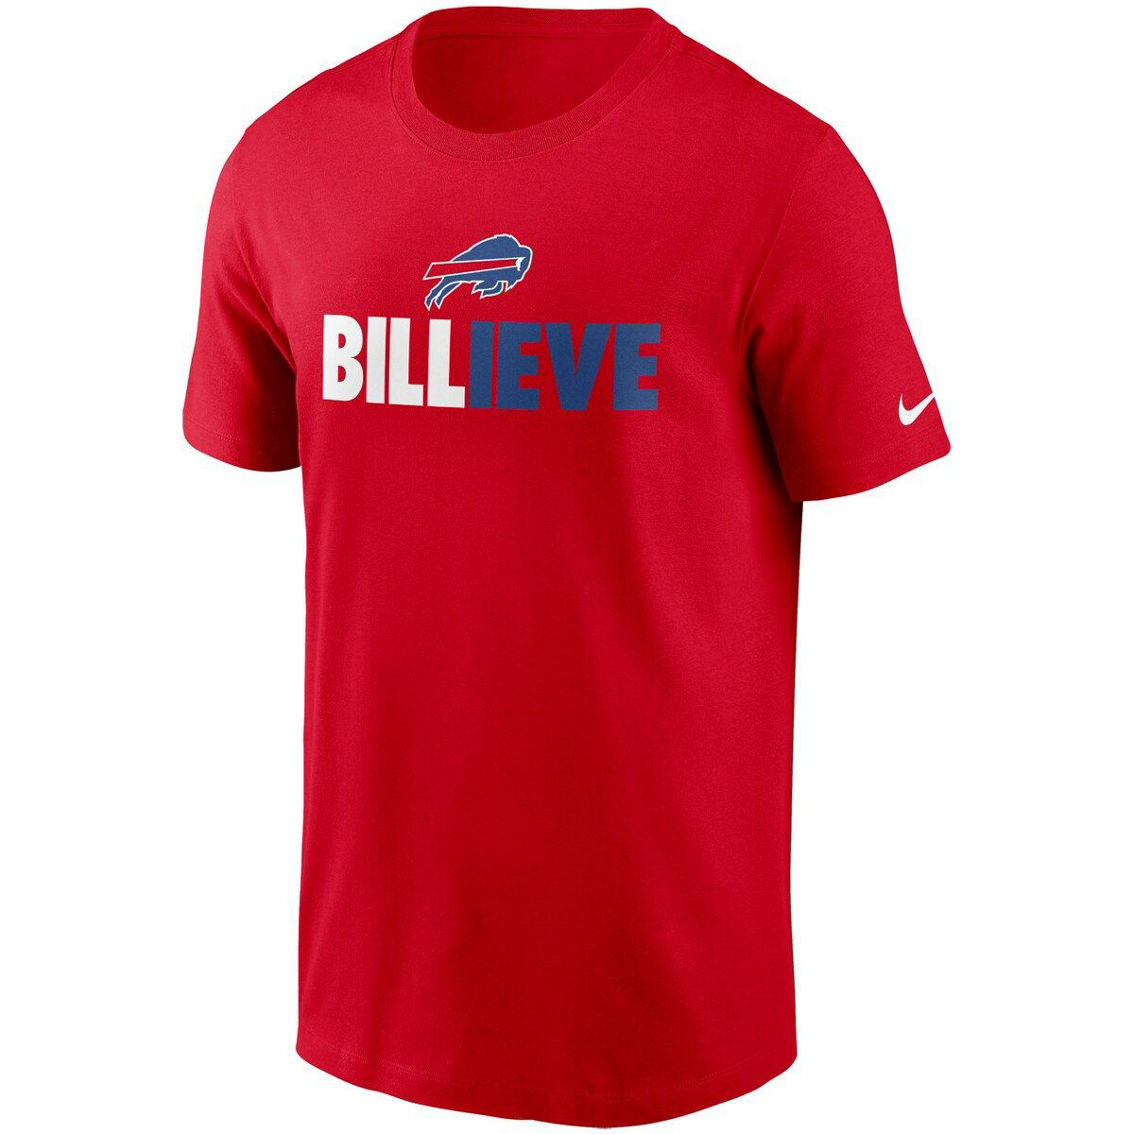 Nike Men's Red Buffalo Bills Hometown Collection T-Shirt - Image 3 of 4